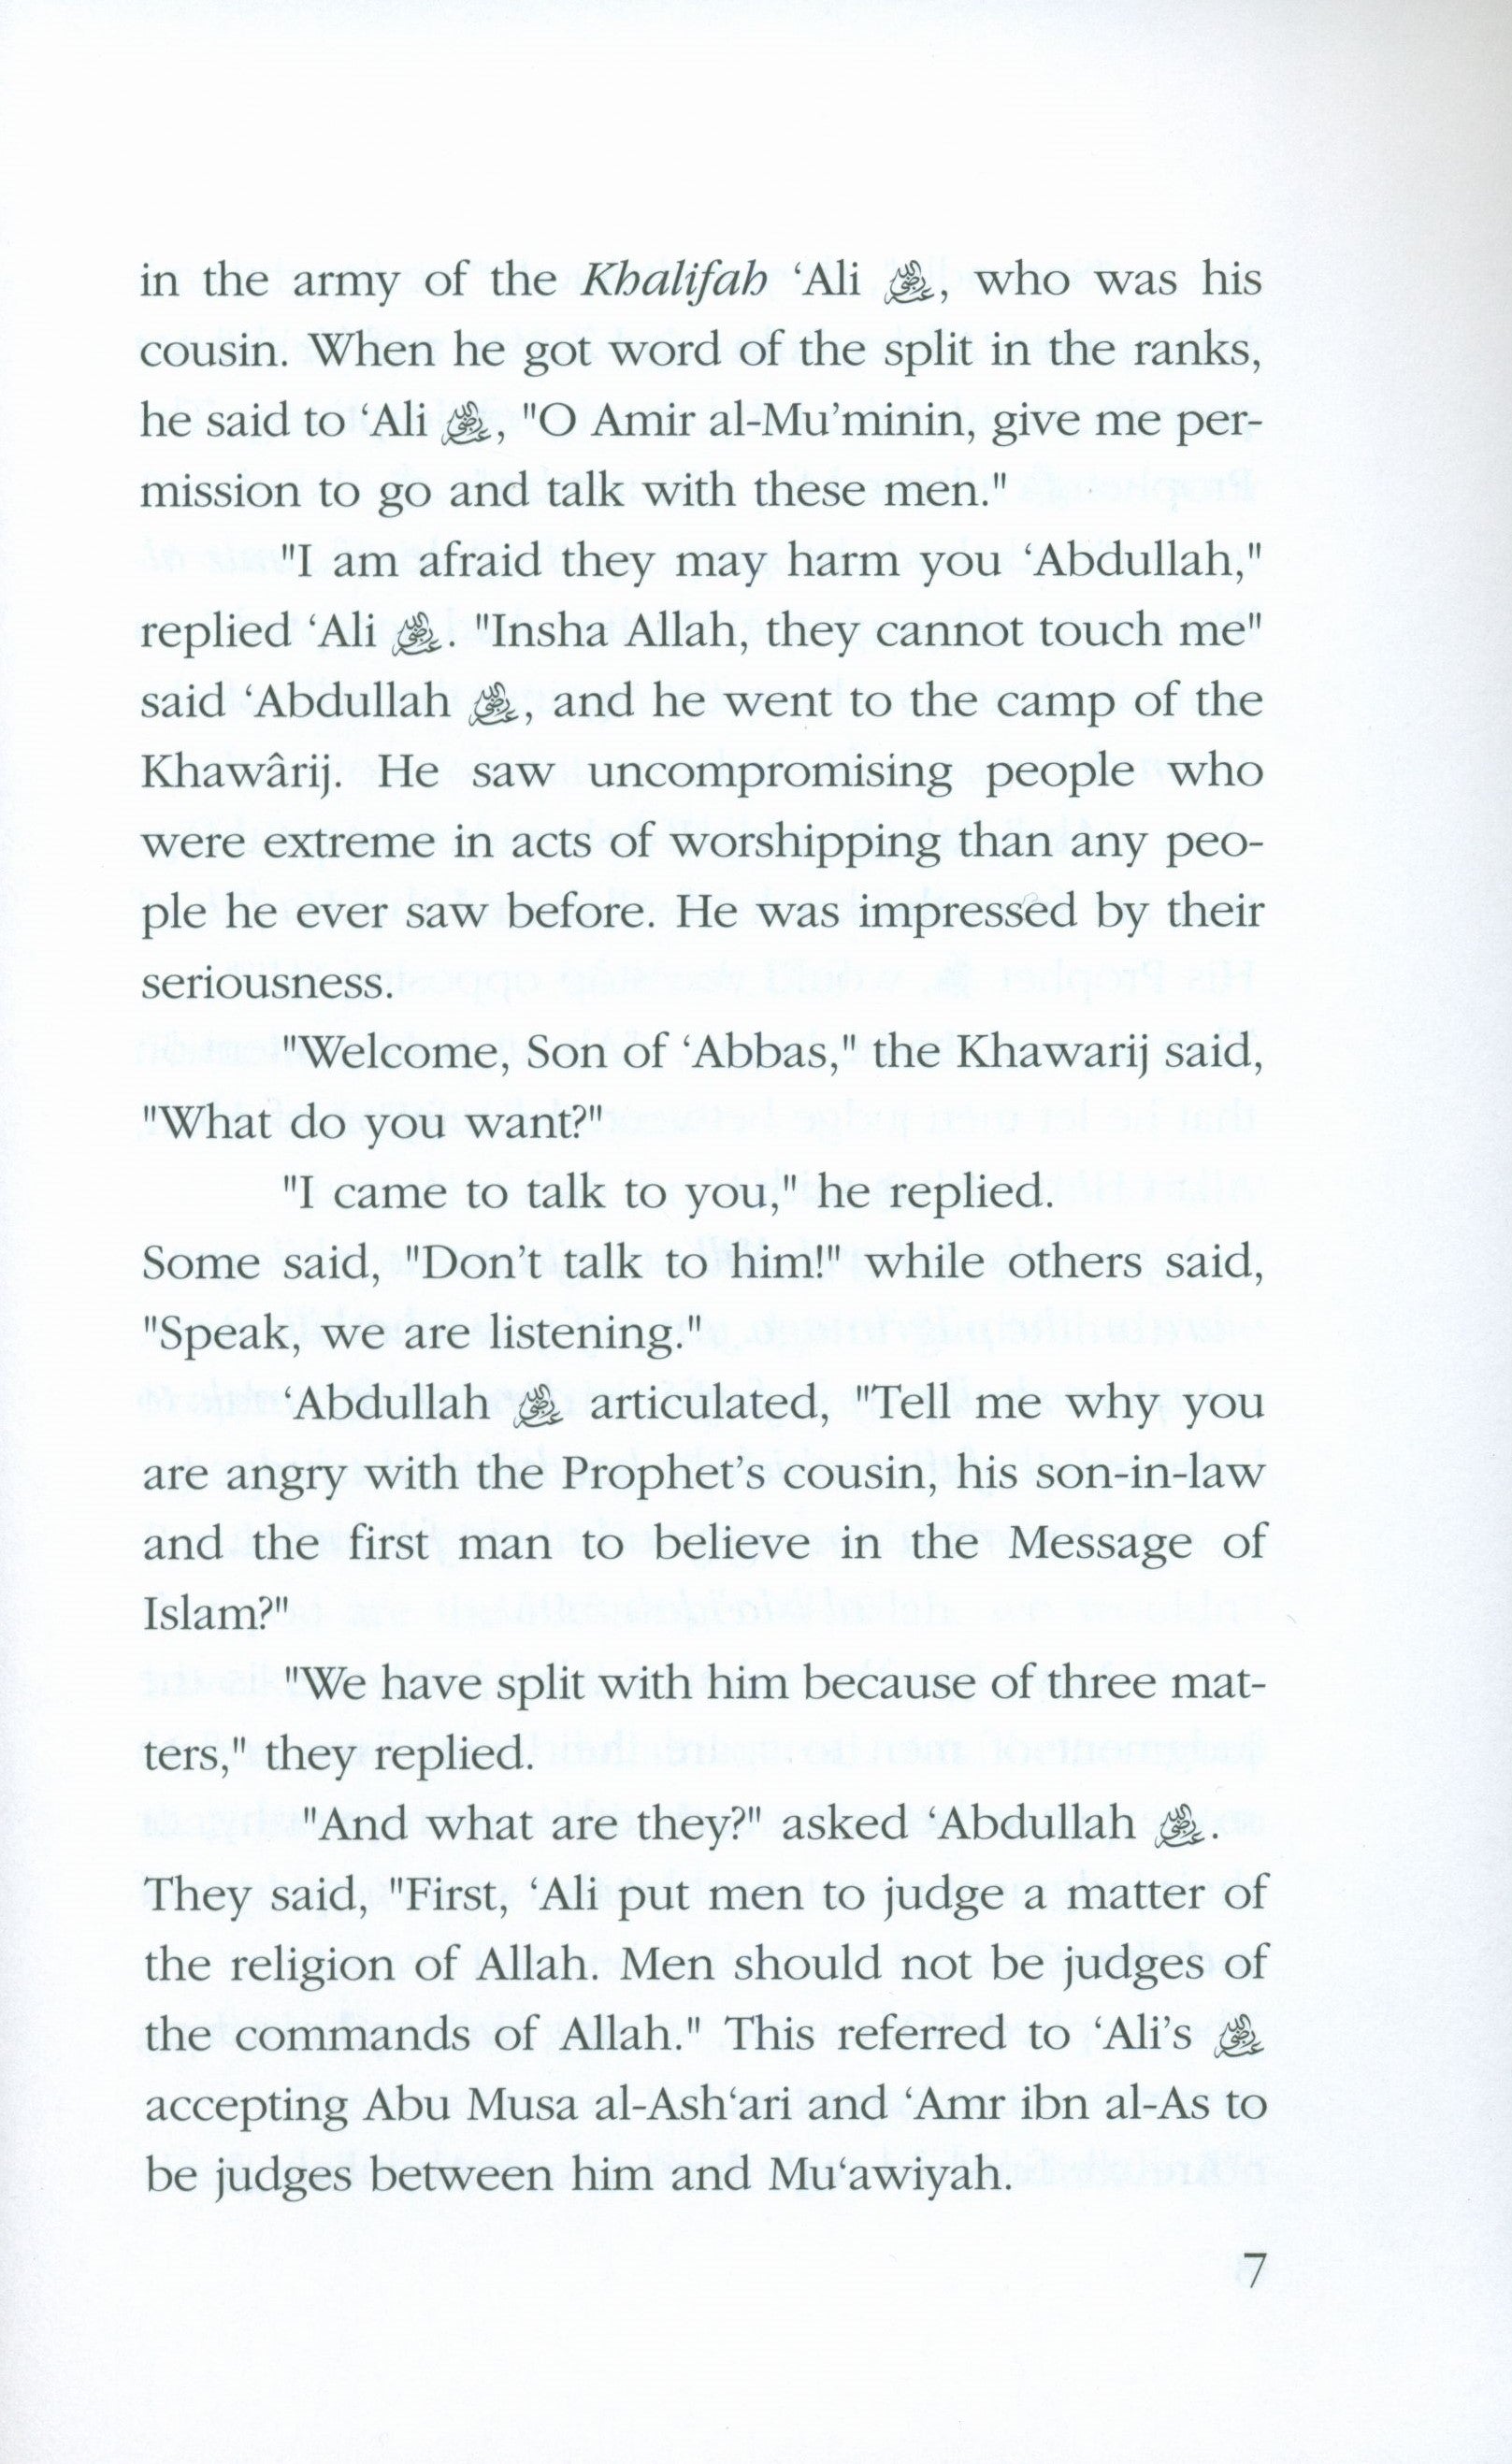 Stories of the Sahabah Volume 5 - Torchbearers of Islam